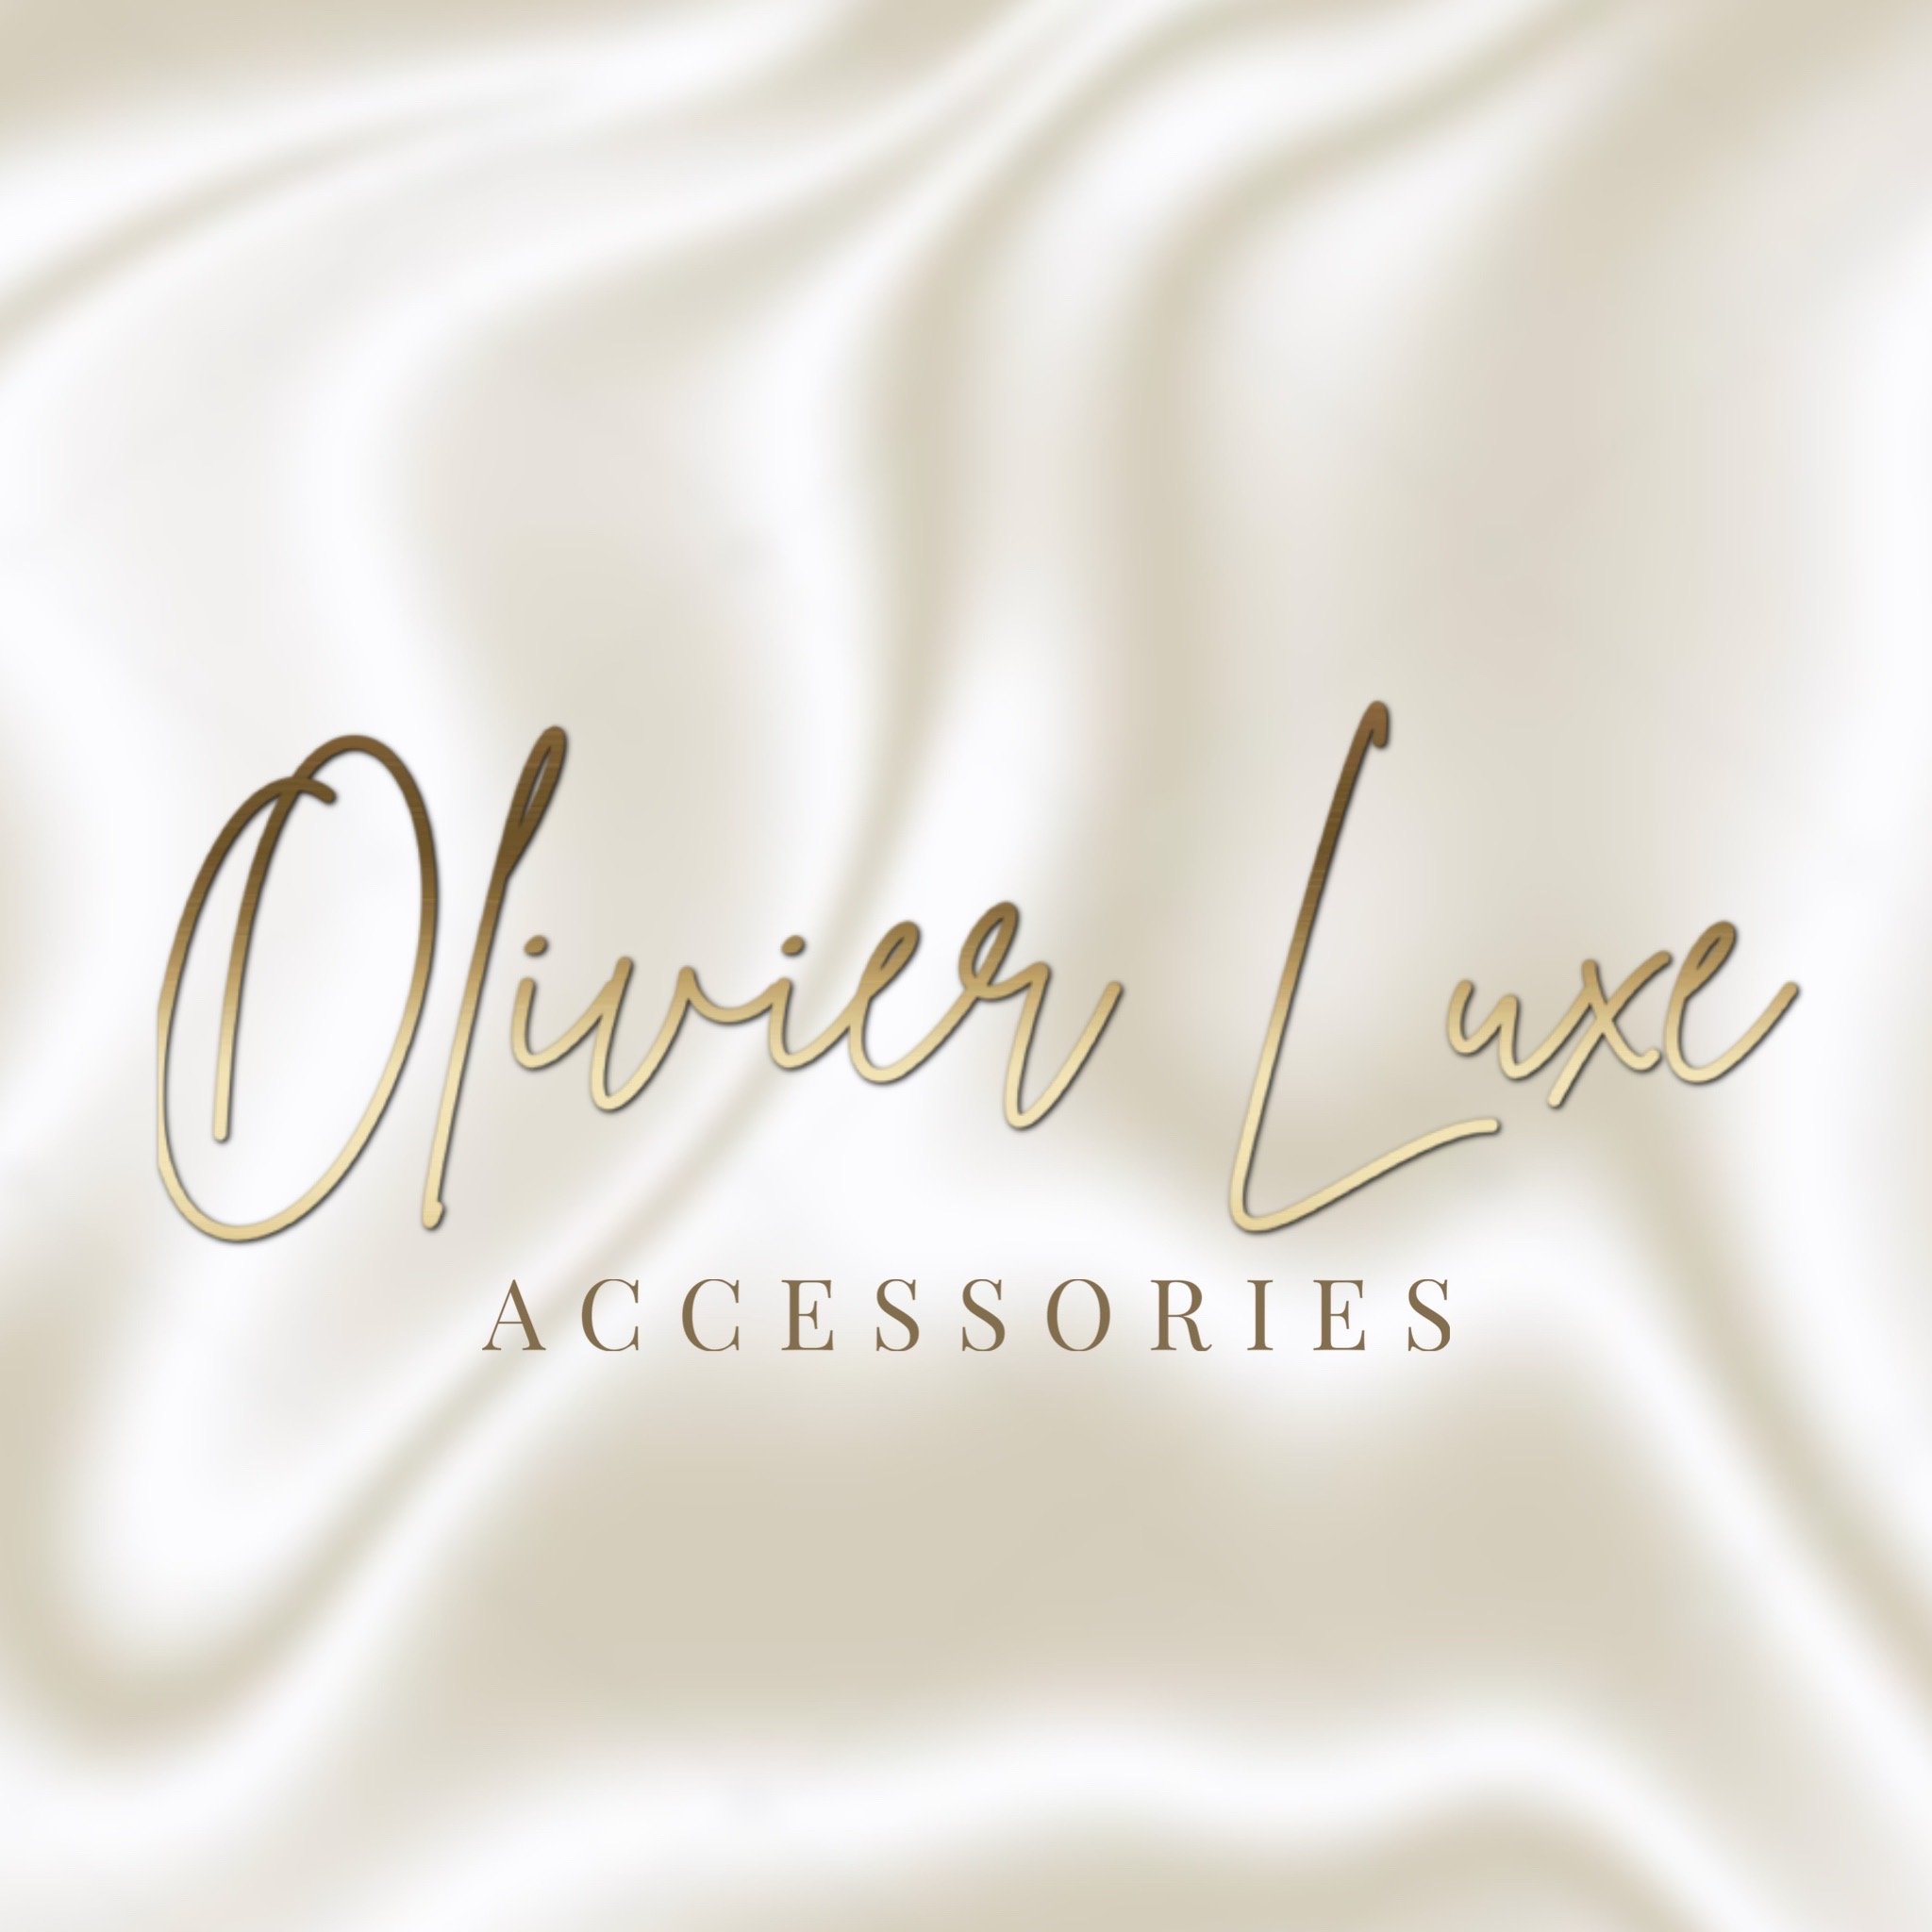 Olivier Luxe Accessories